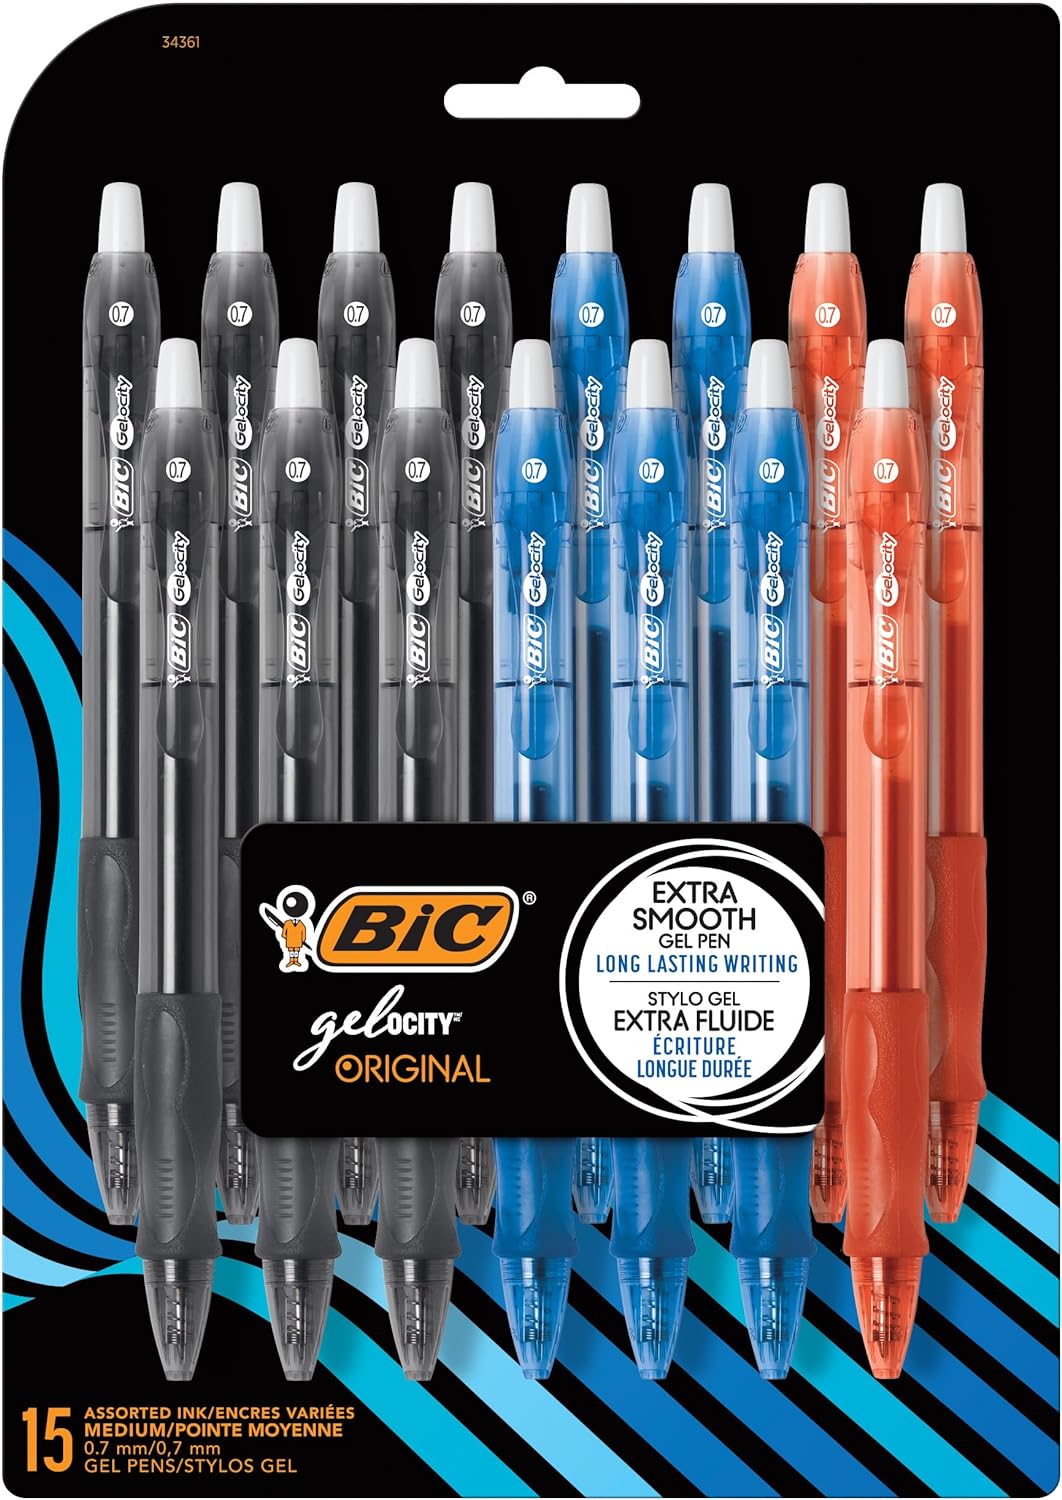 BIC Gel-ocity Retractable Gel Pen, Medium Point (0.7mm), Assorted Colors, Comfortable, Contoured Grip, color gel pens (15 count)